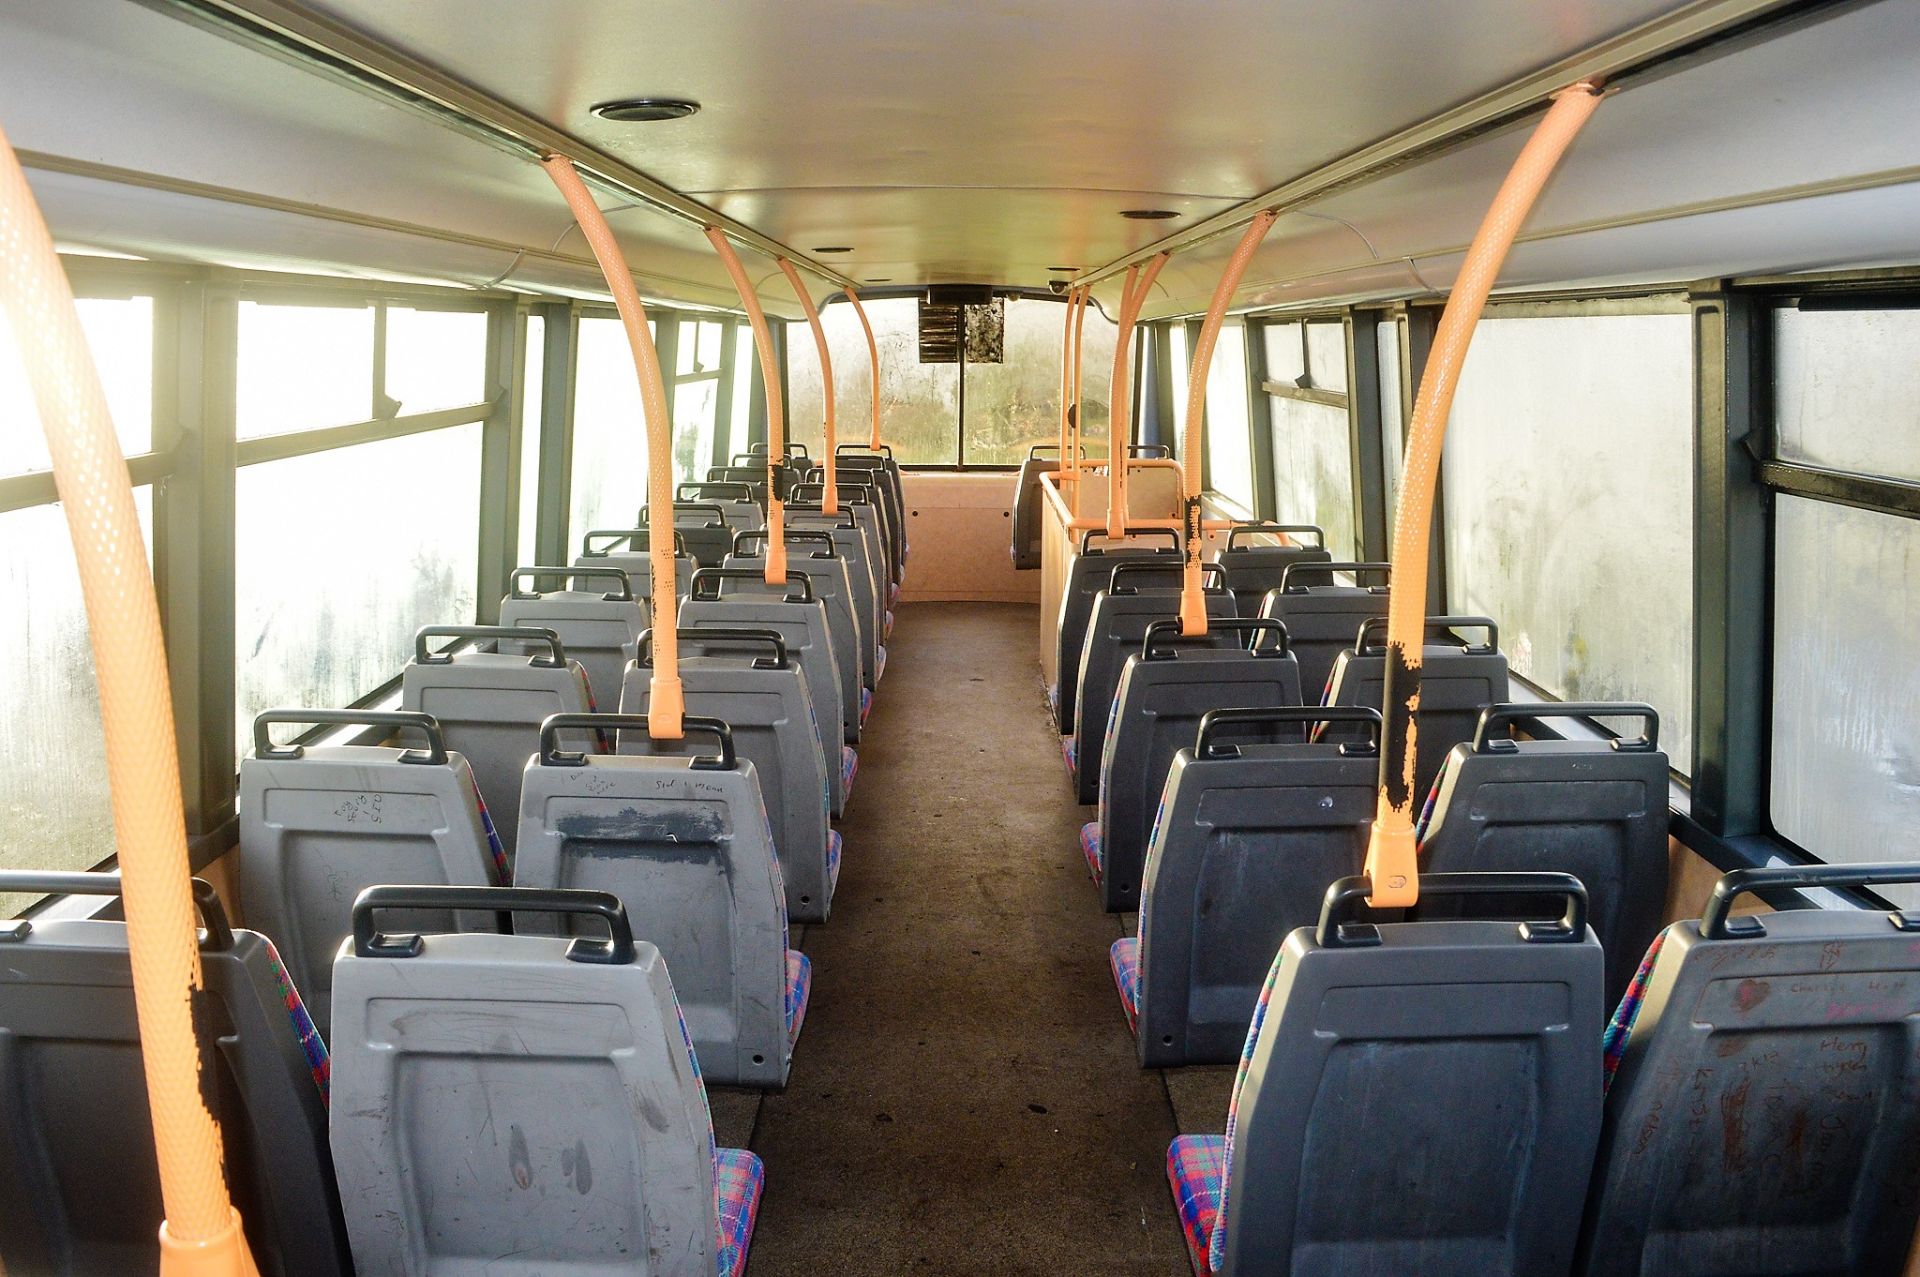 Alexander Dennis Trident Plaxton President 75 seat double deck service bus Registration Number: V533 - Image 10 of 11